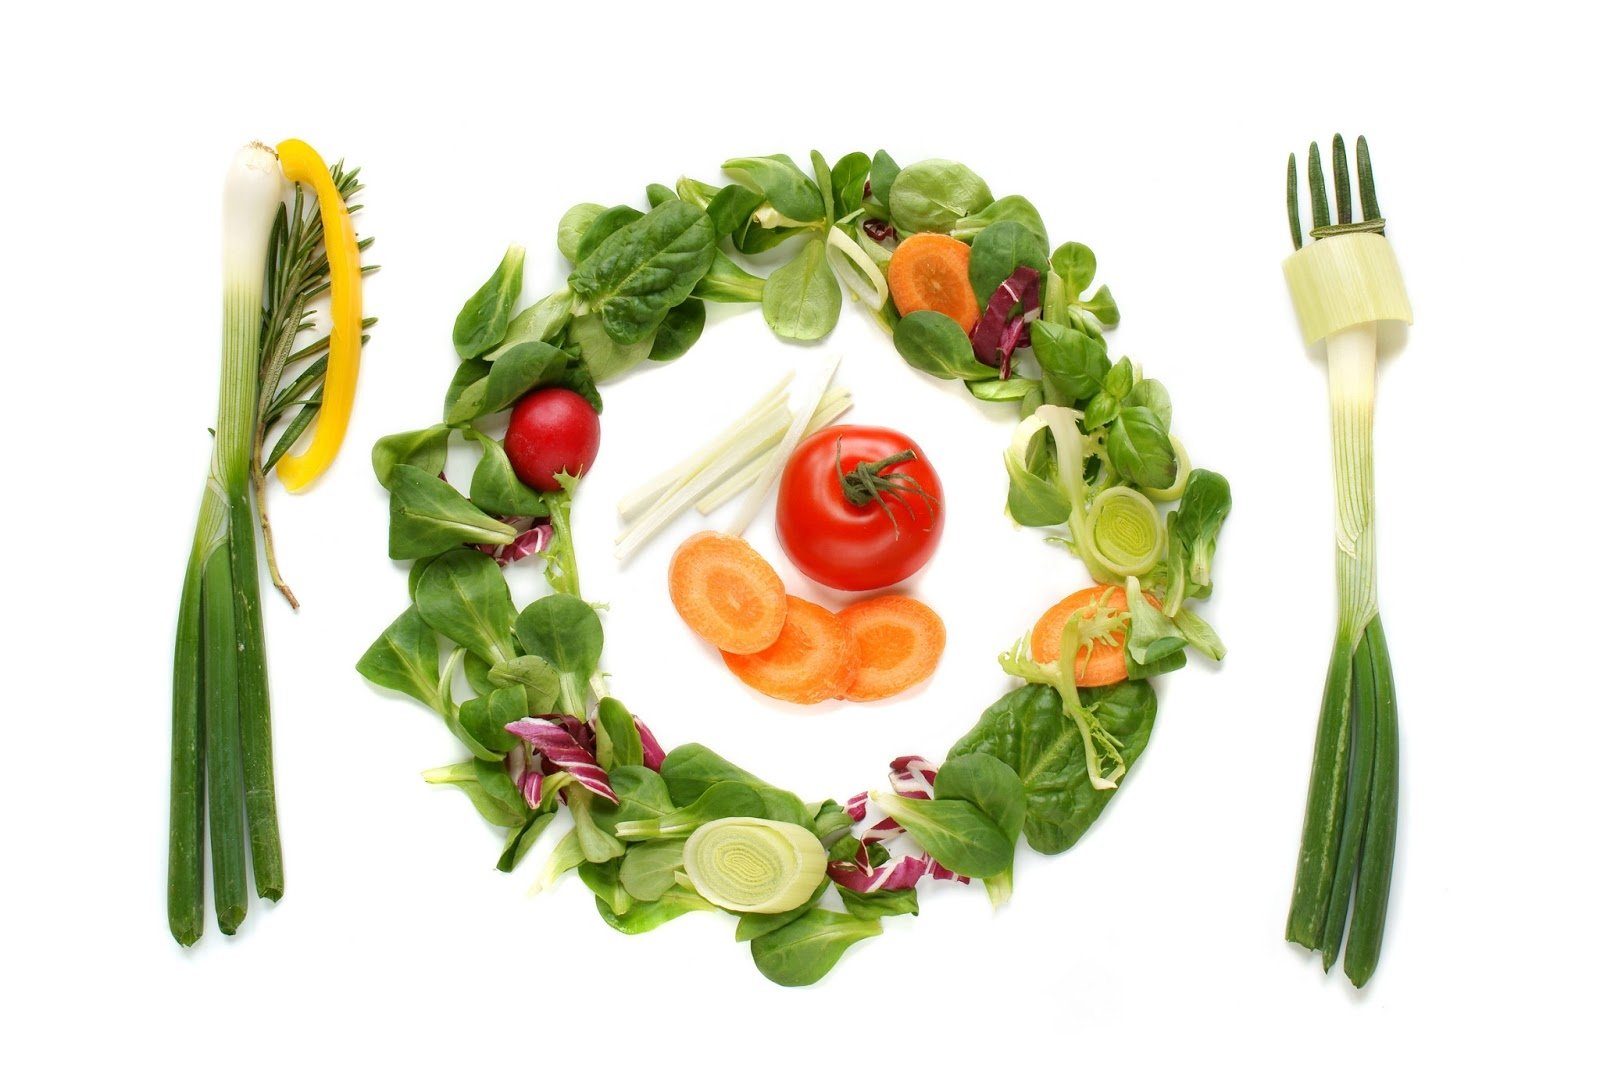 “Vegetariane: perché?”, un convegno di Confagricoltura Donna Alessandria